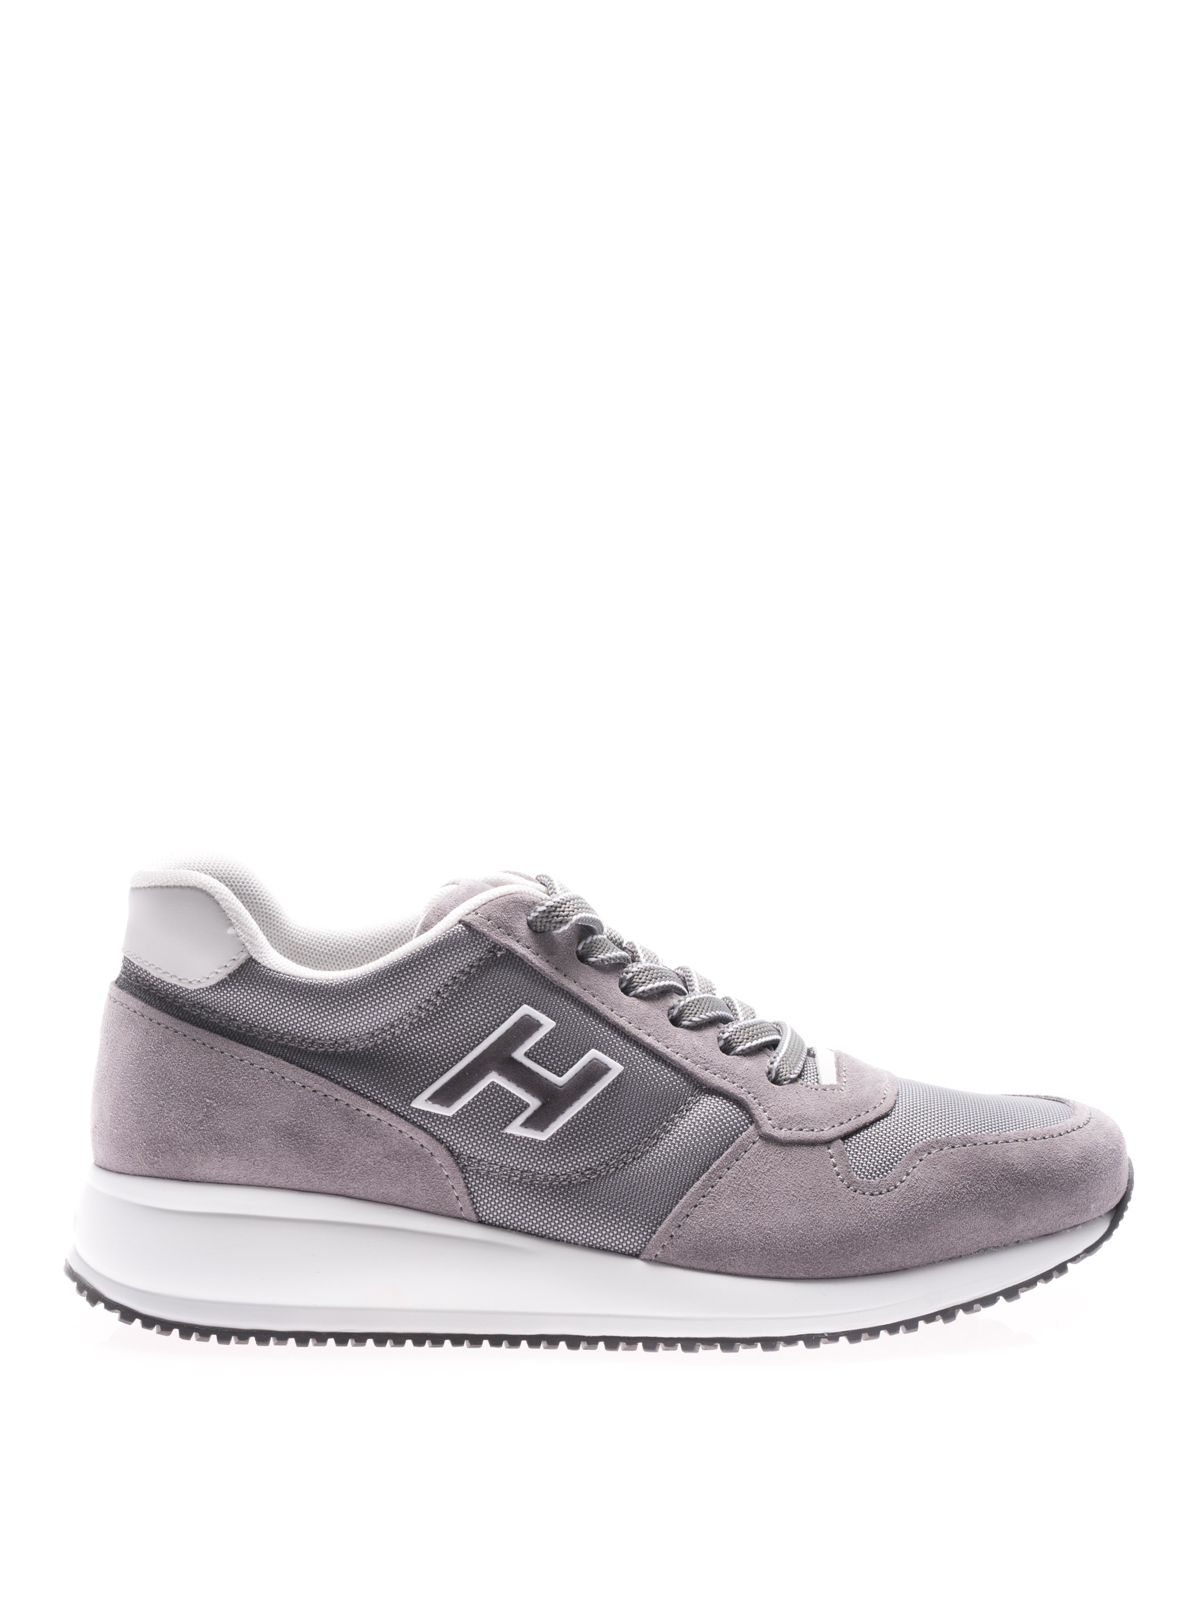 Trainers Hogan - Interactive N20 grey suede sneakers - HXM2460Y790I9L413M